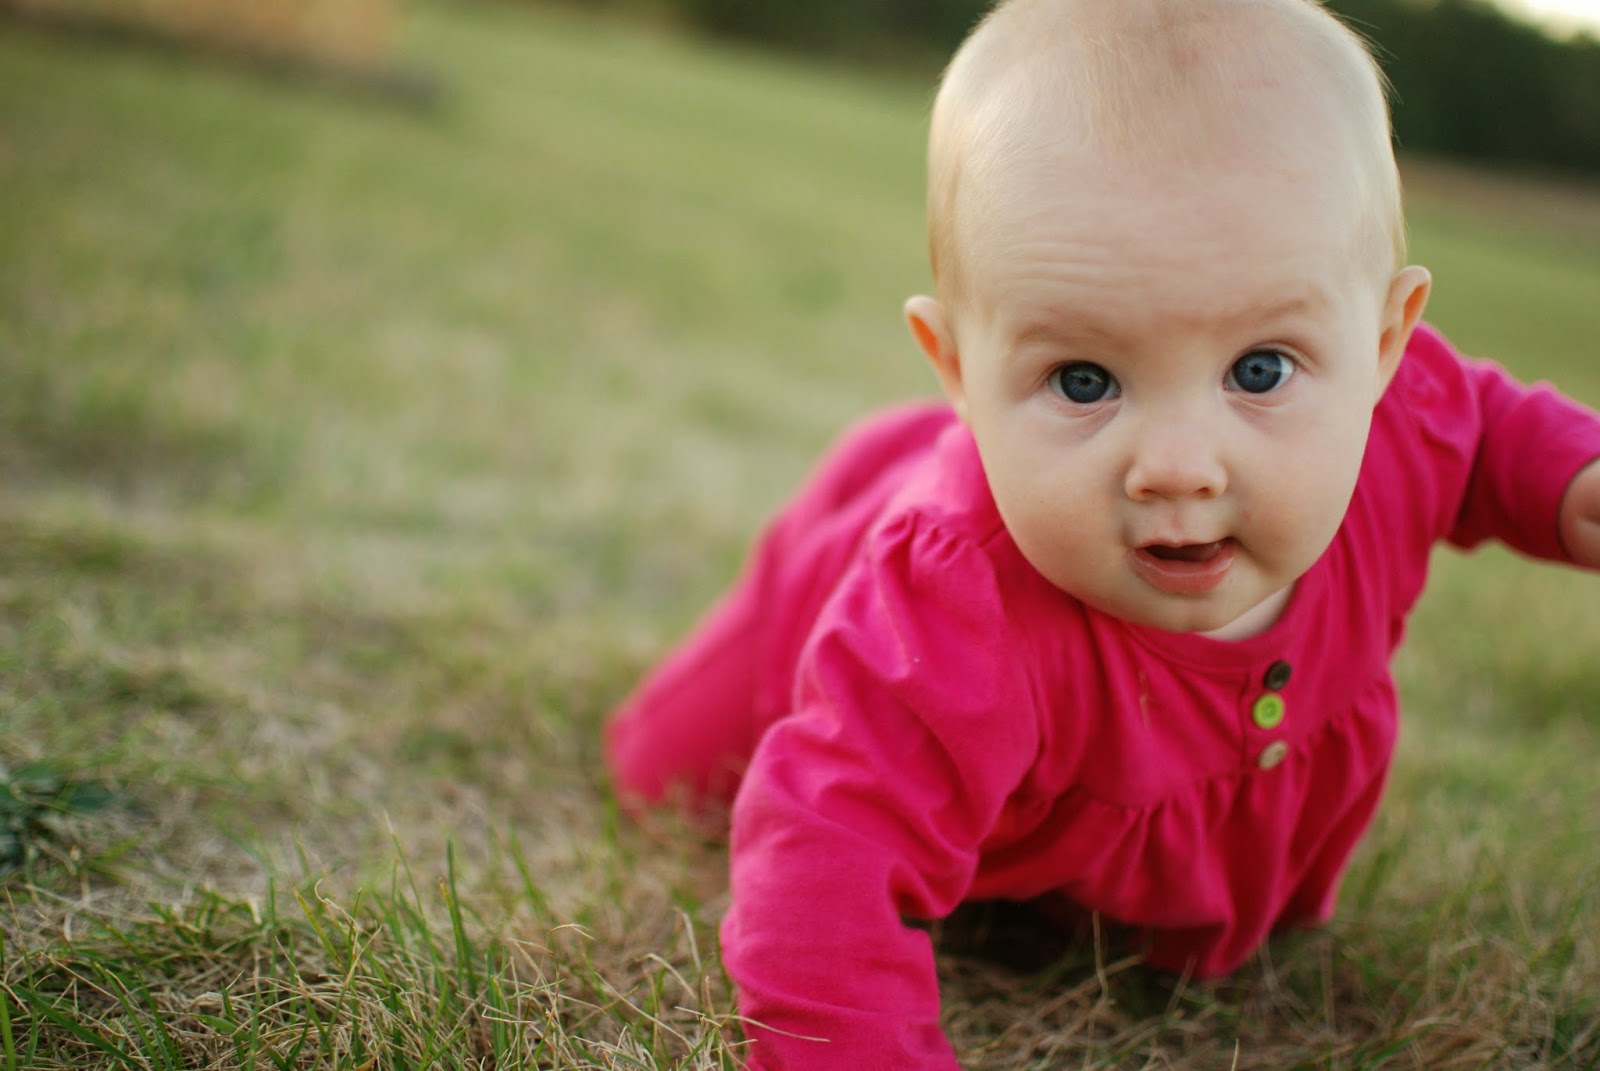 4 months old. Даунята 3-4 месяцев. Фотоссесия ребёнок 4 месяца фото. Ребенок 4 месяца 4 колесо.